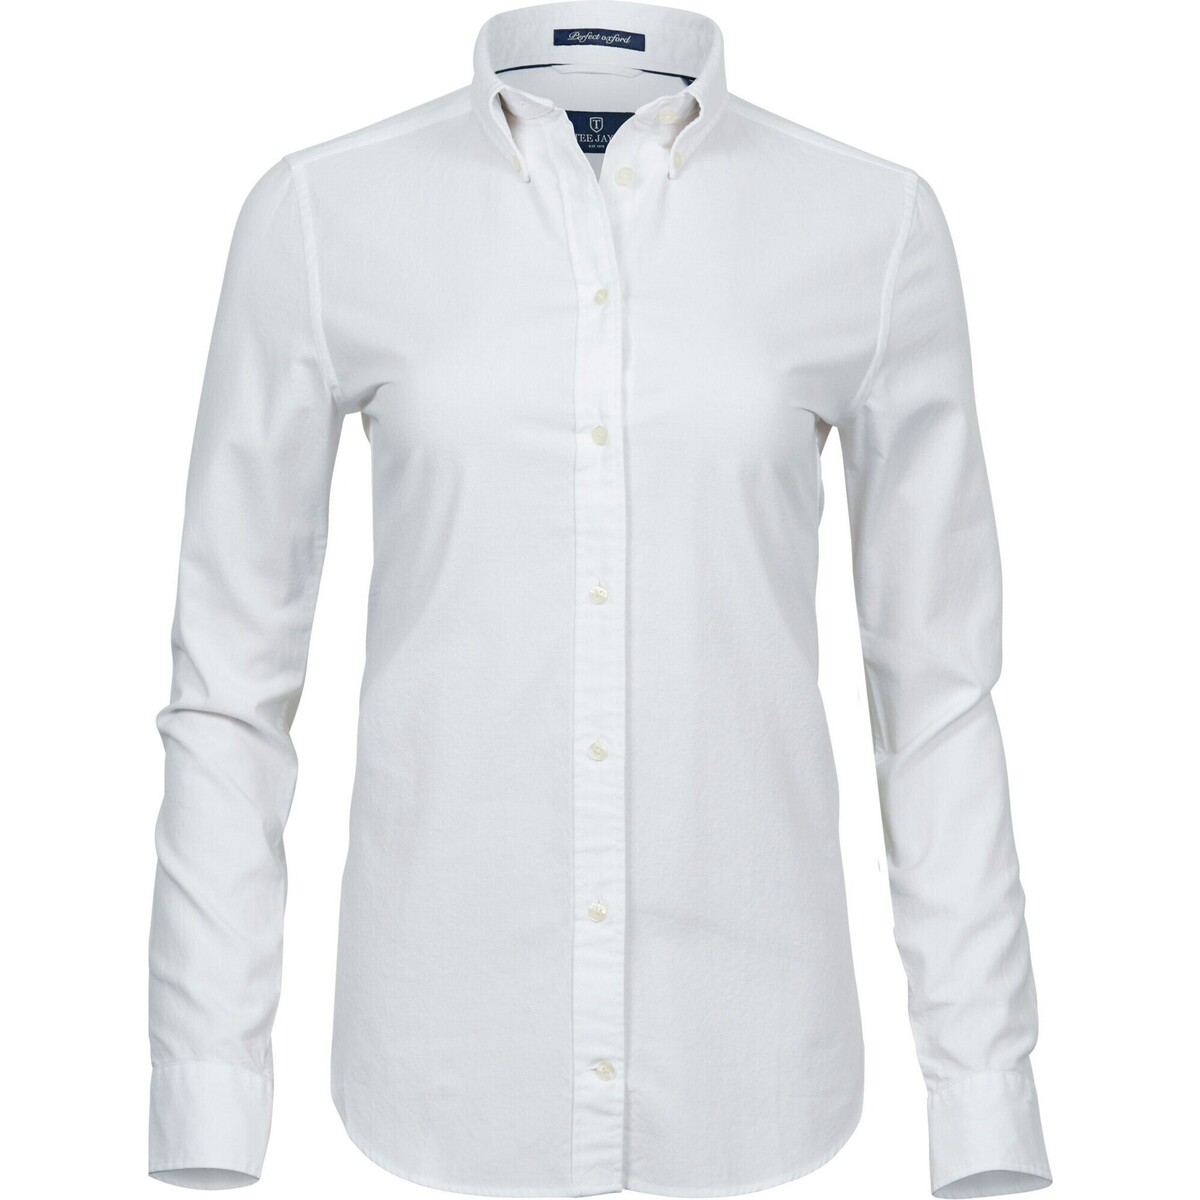 Abbigliamento Donna Camicie Tee Jays Perfect Bianco